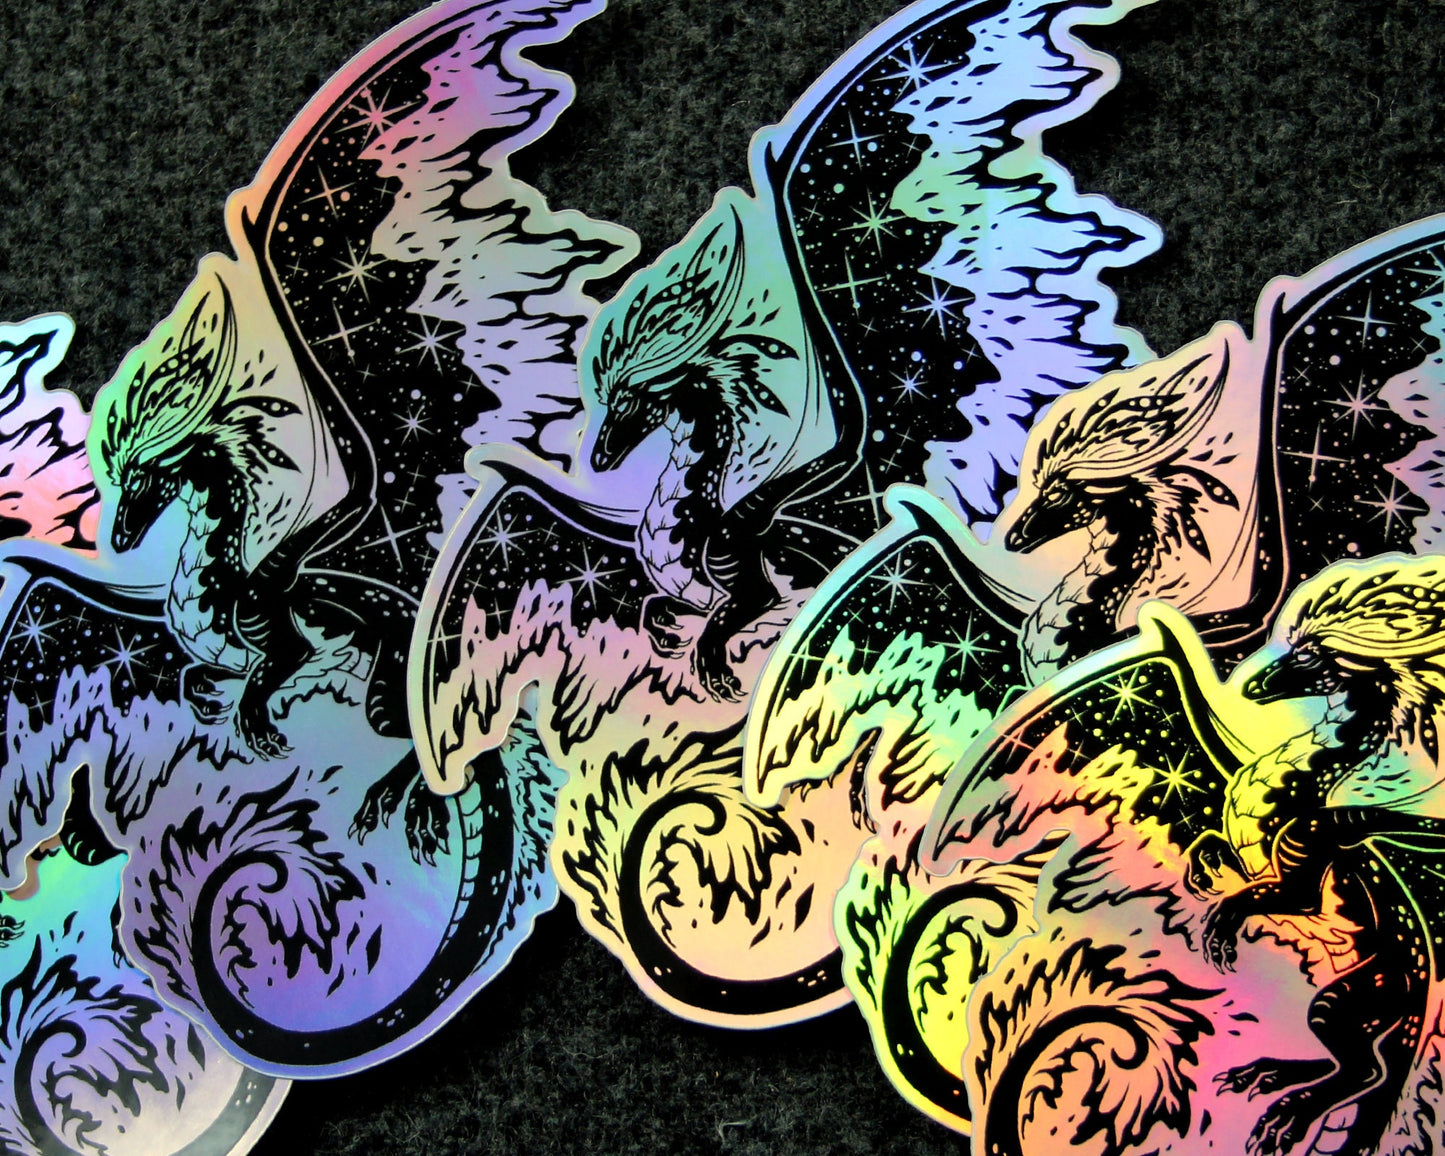 Space Dragon (Black) - Rainbow Holographic Vinyl Sticker